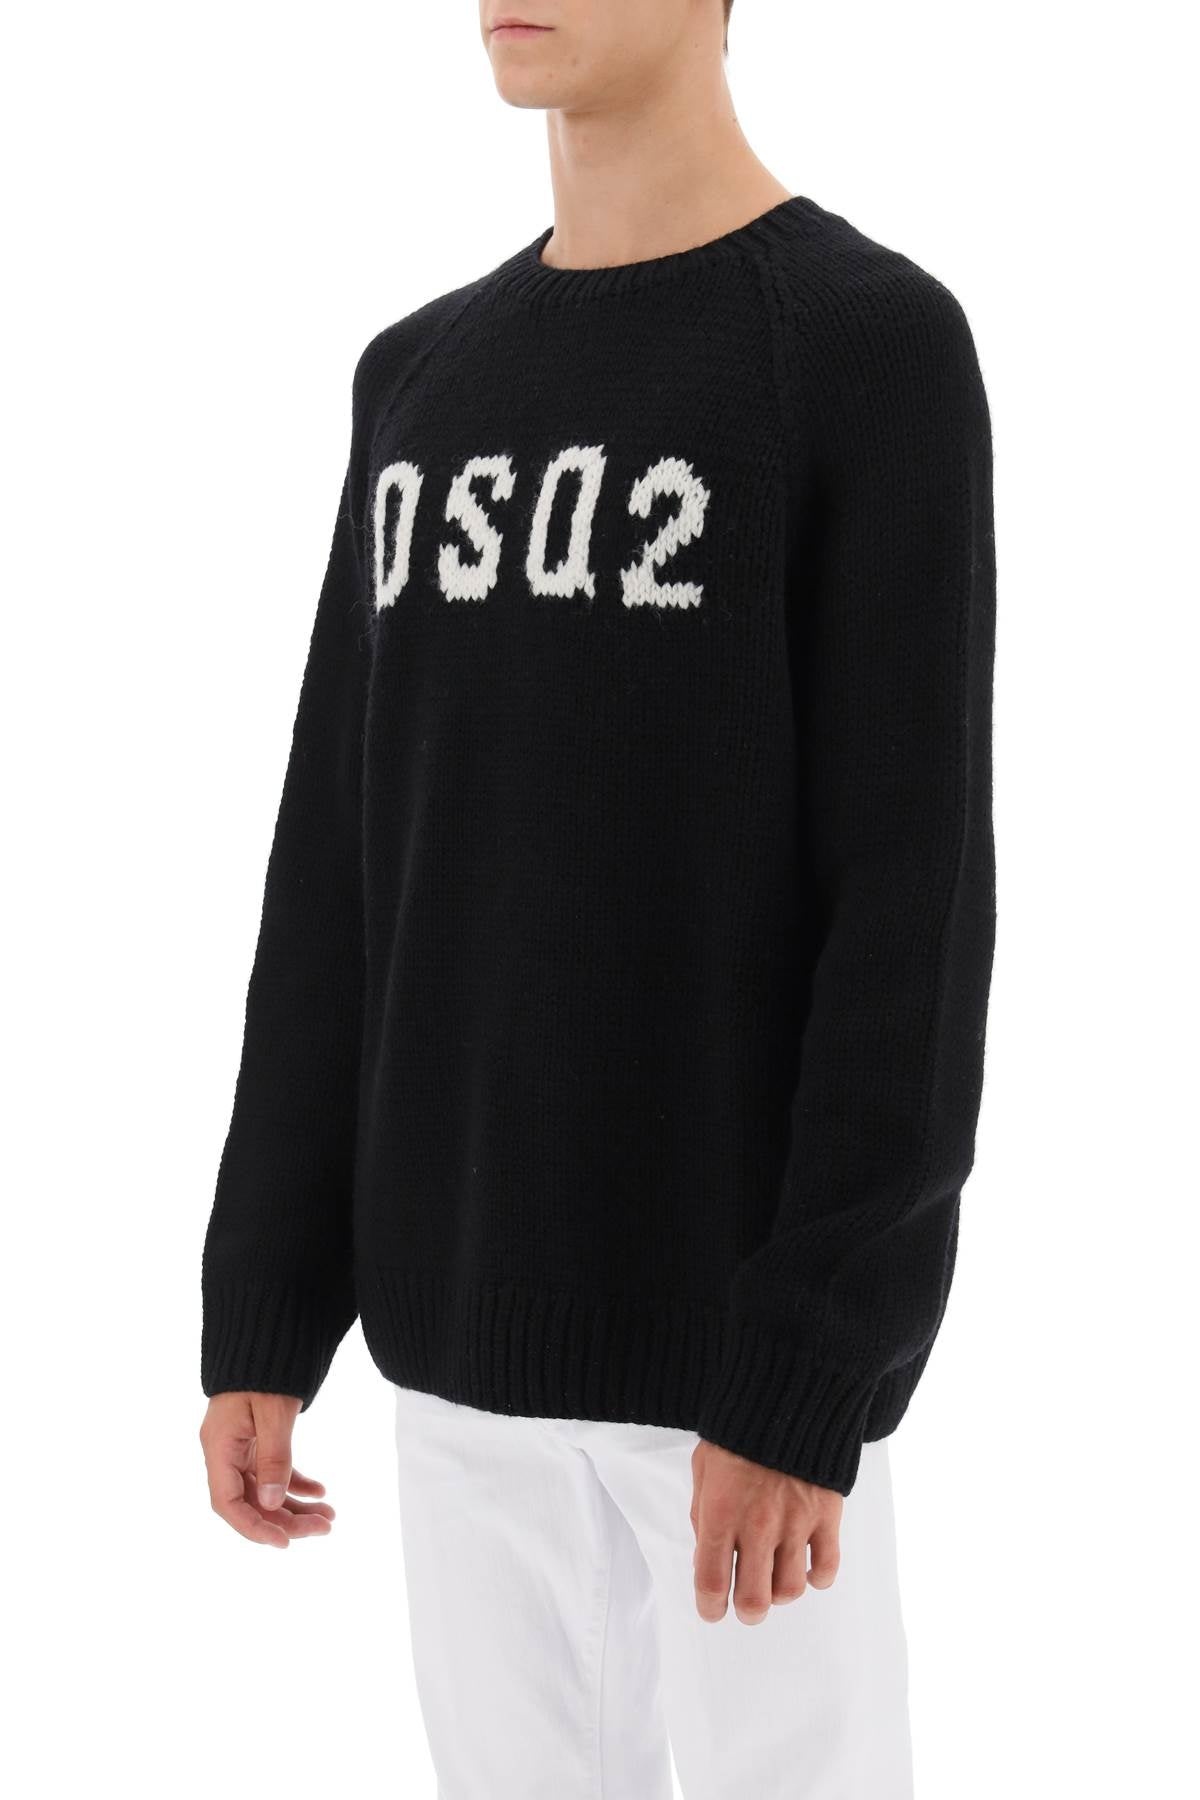 Dsq2 Wool Sweater - 2